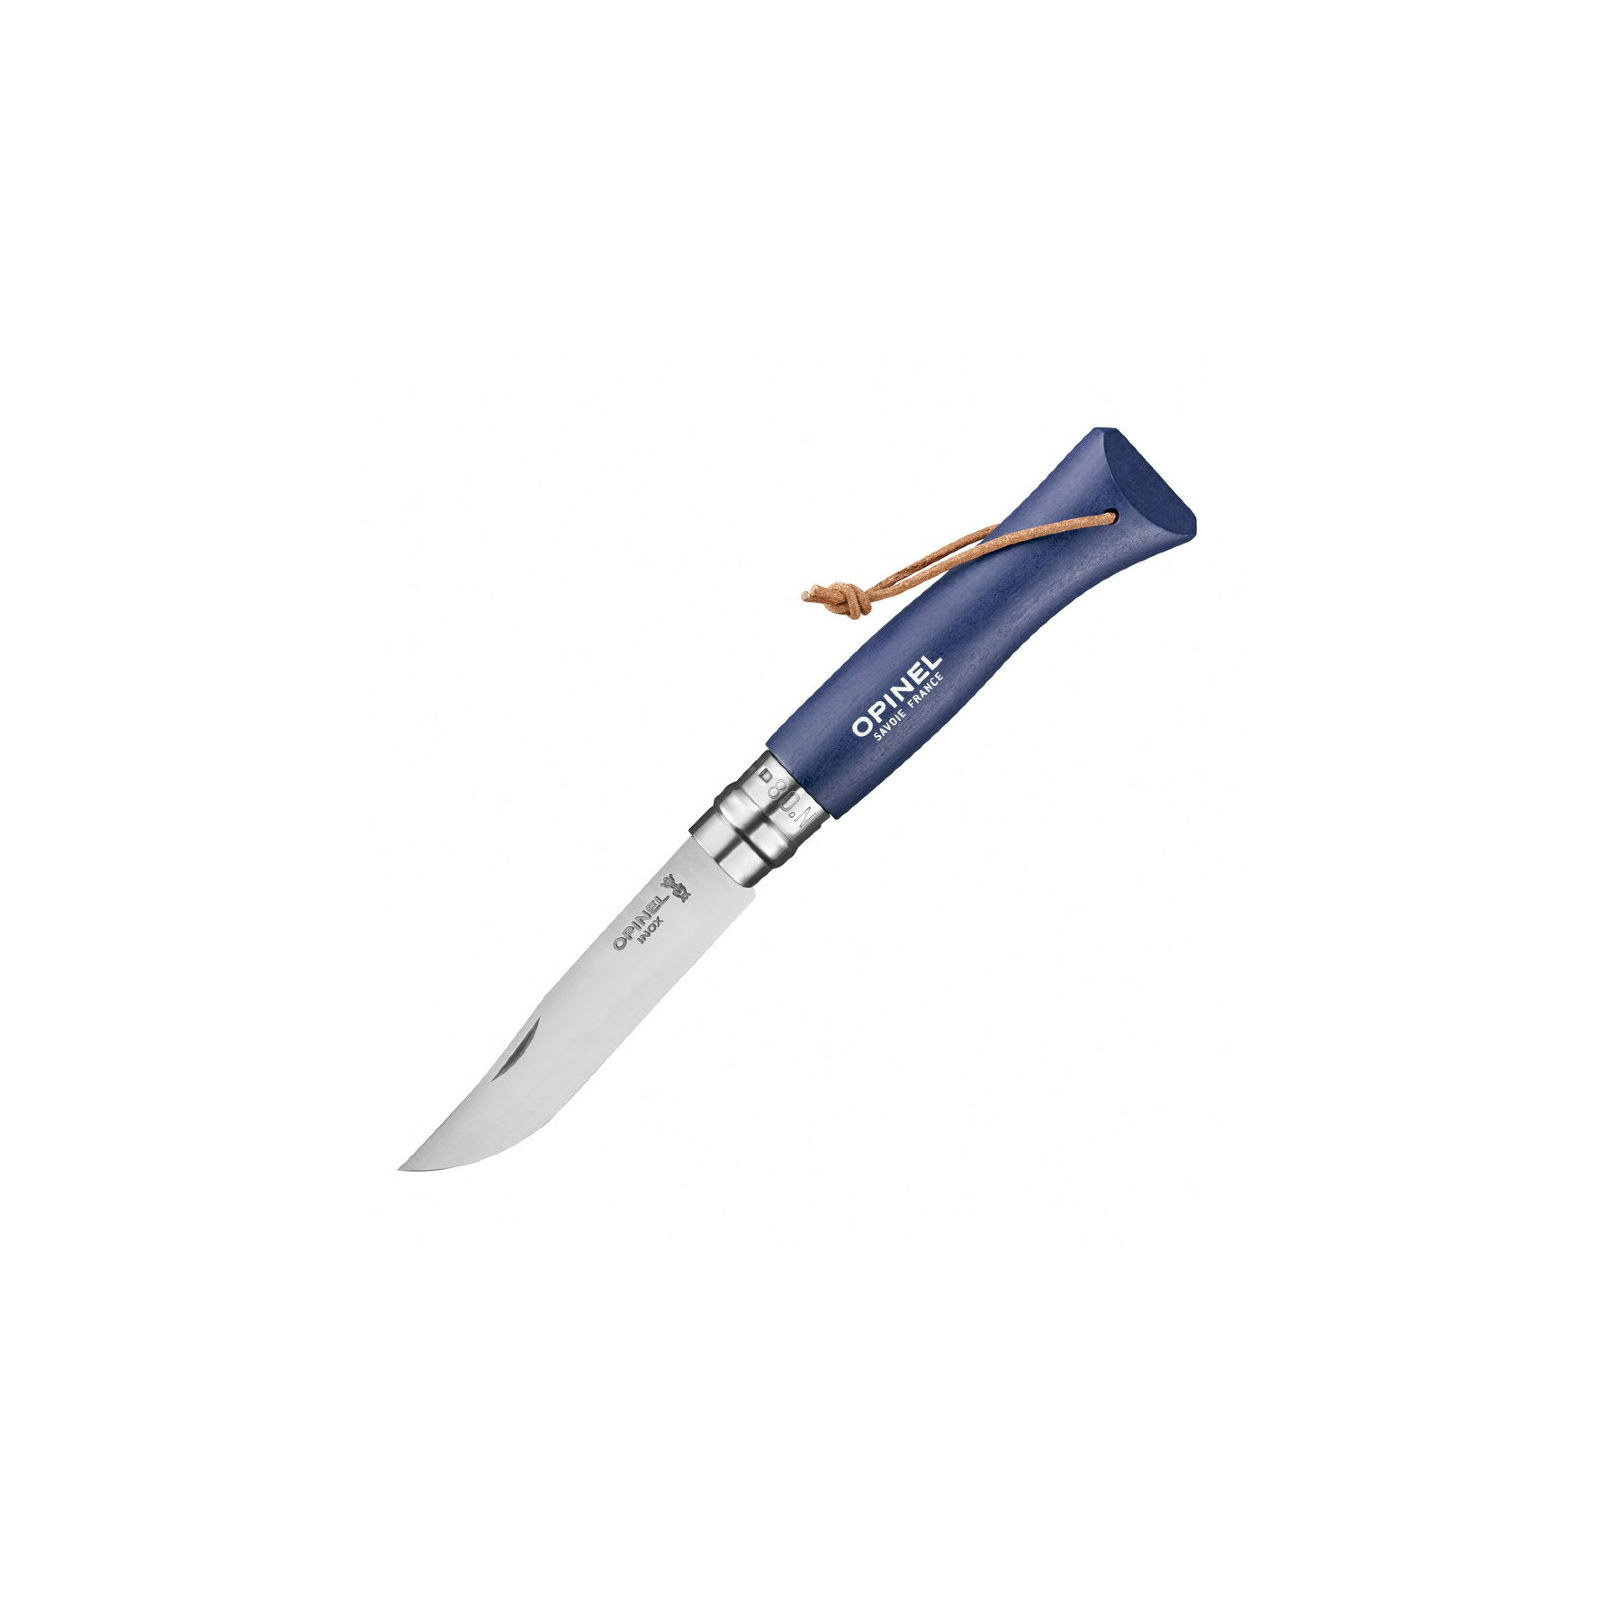 Нож Opinel №8 Inox VRI Trekking темно-синий, без упаковки (002212)